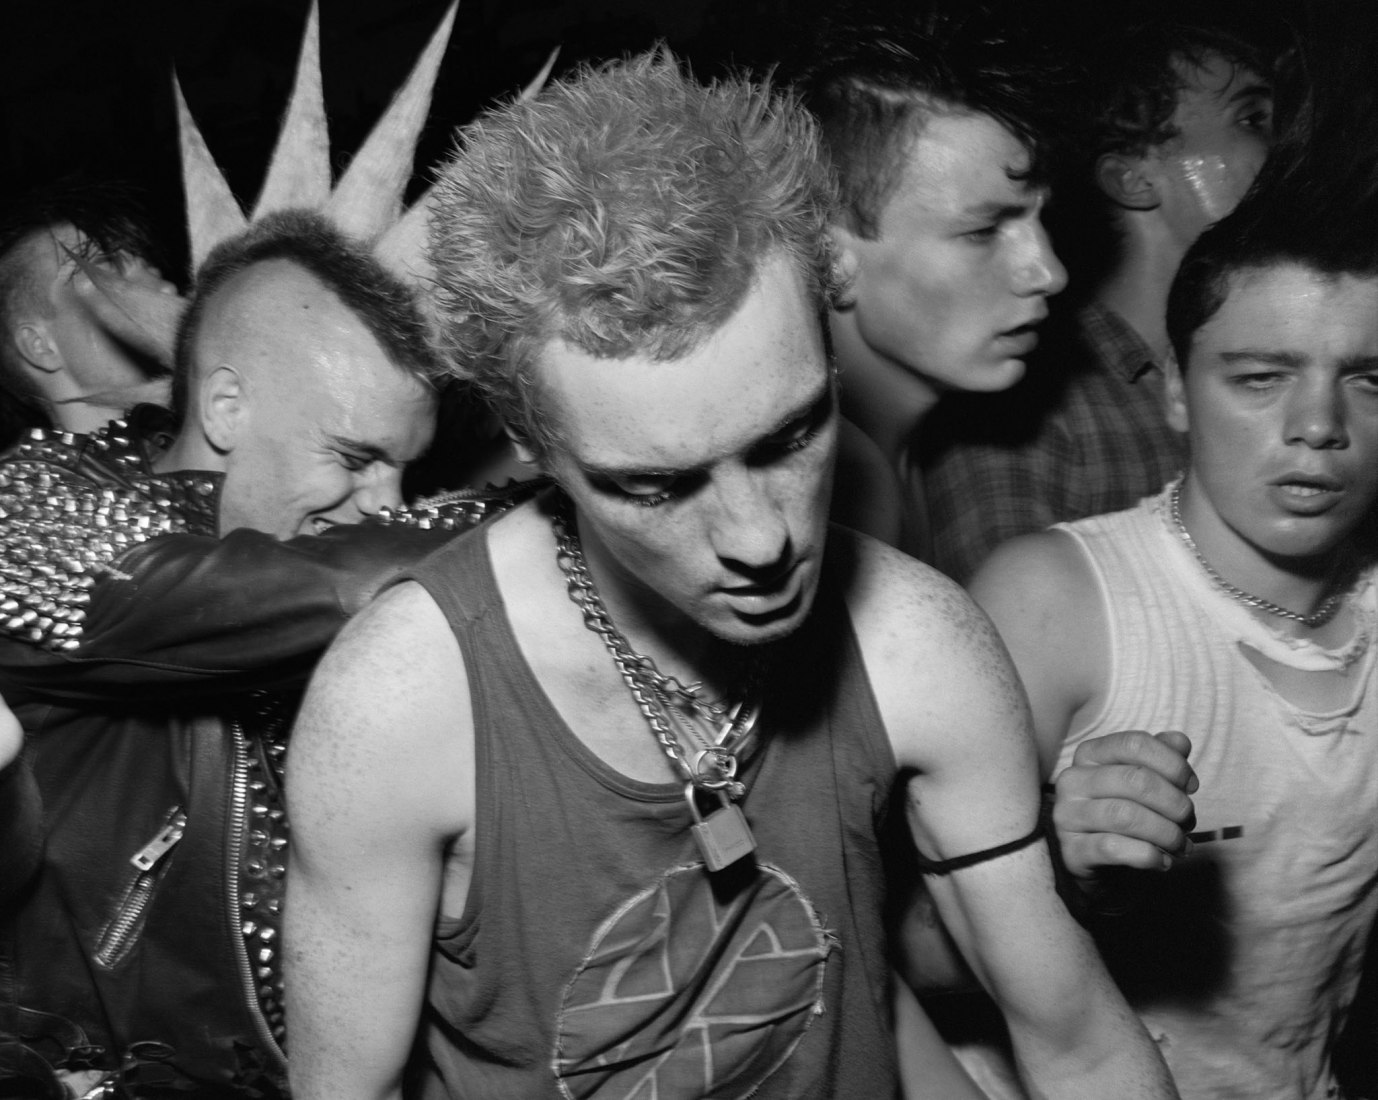 CHRIS KILLIP. Punks, Gateshead, Tyneside. 1985. Serie: North East. (1975-1988) Copia al bromuro y gelatia de plata. 47,2 x 58,7. Cortesía del artista. © Chris Killip.